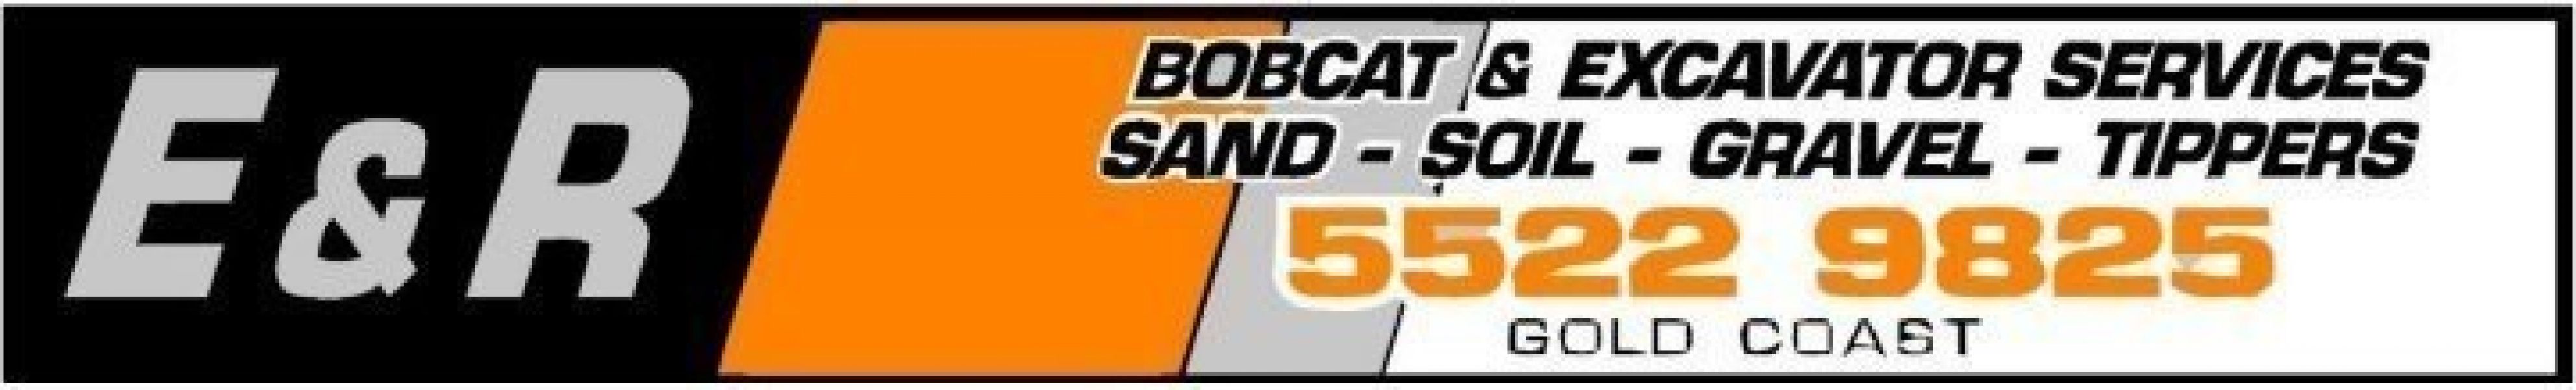 E & R Bobcat & Excavator Services | Excavator Contractors in Gold Coast